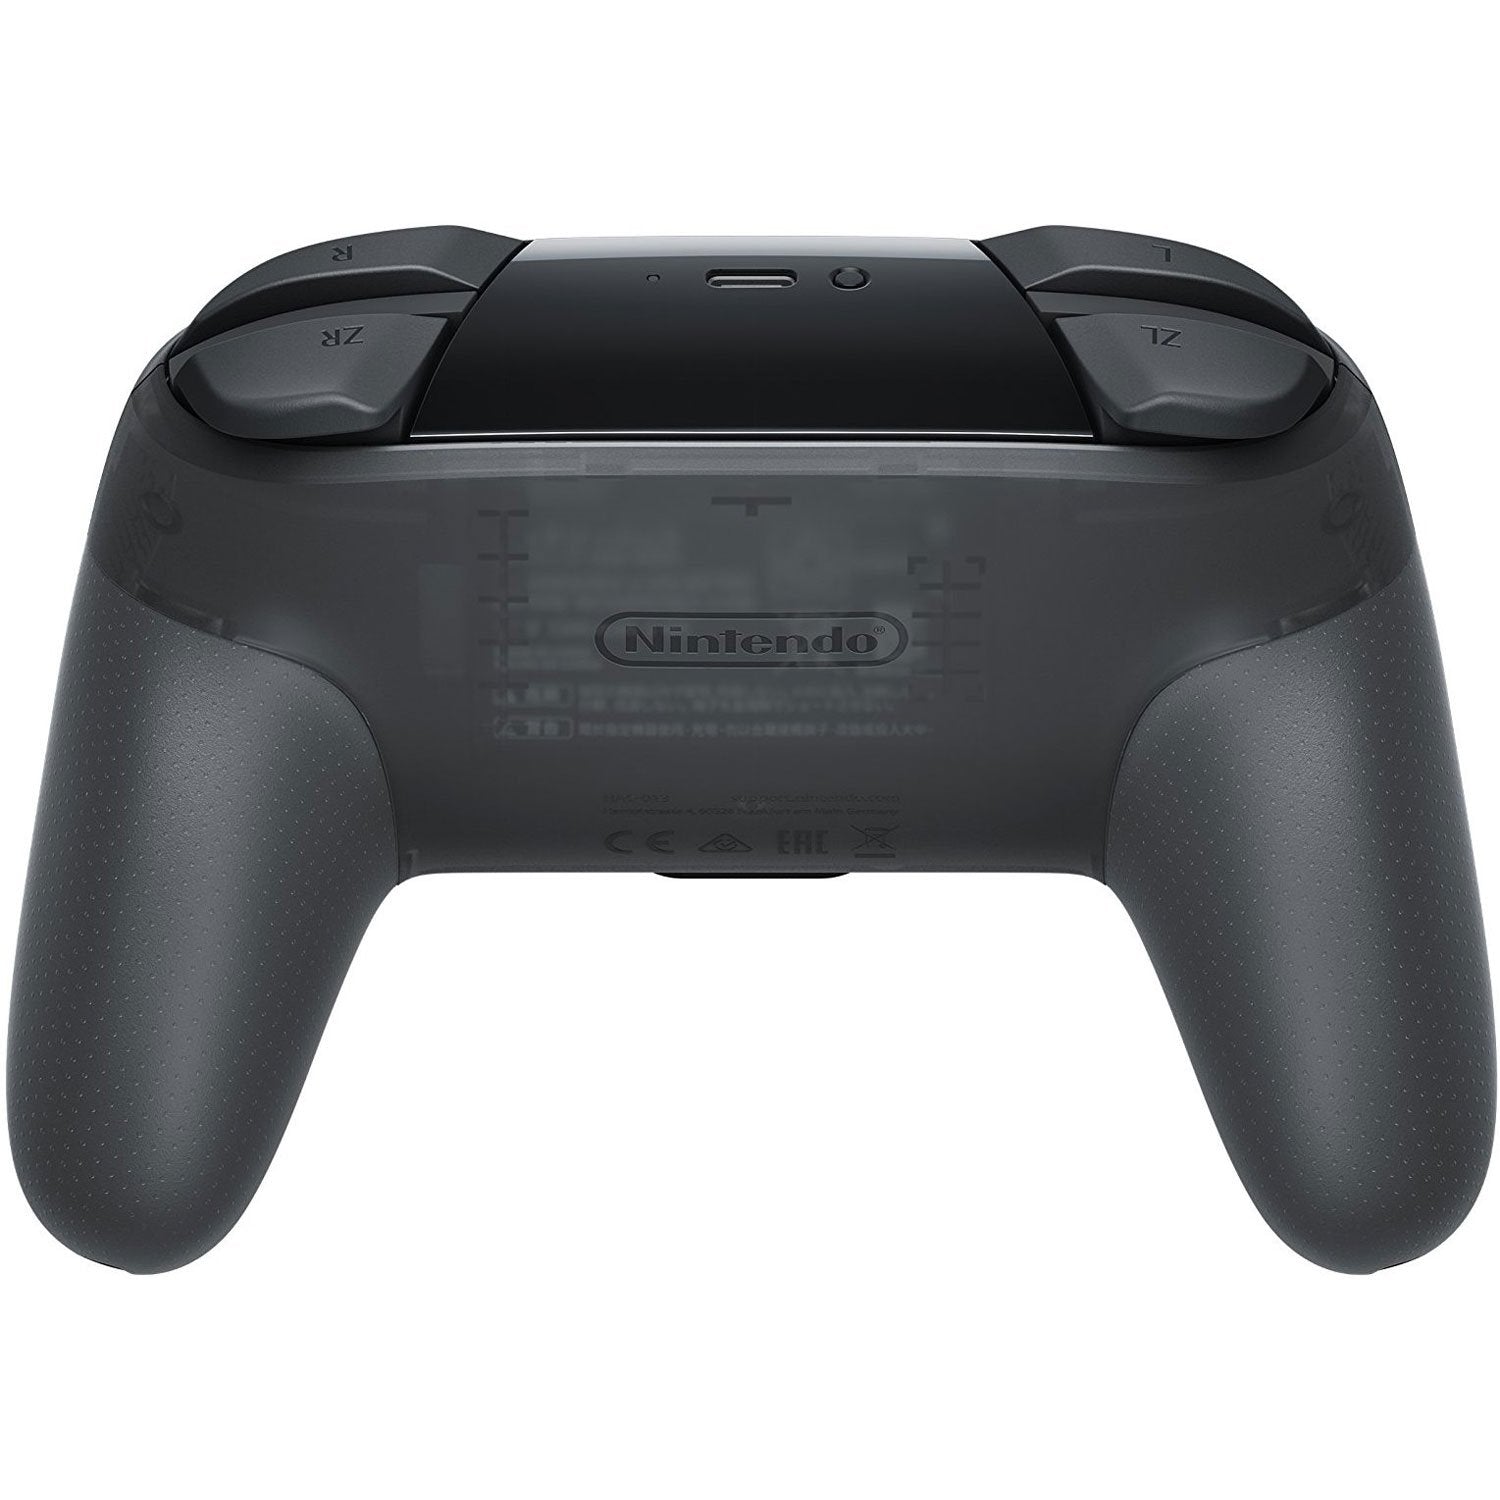 Nintendo Pro Wireless Controller for Nintendo Switch - Black (New)